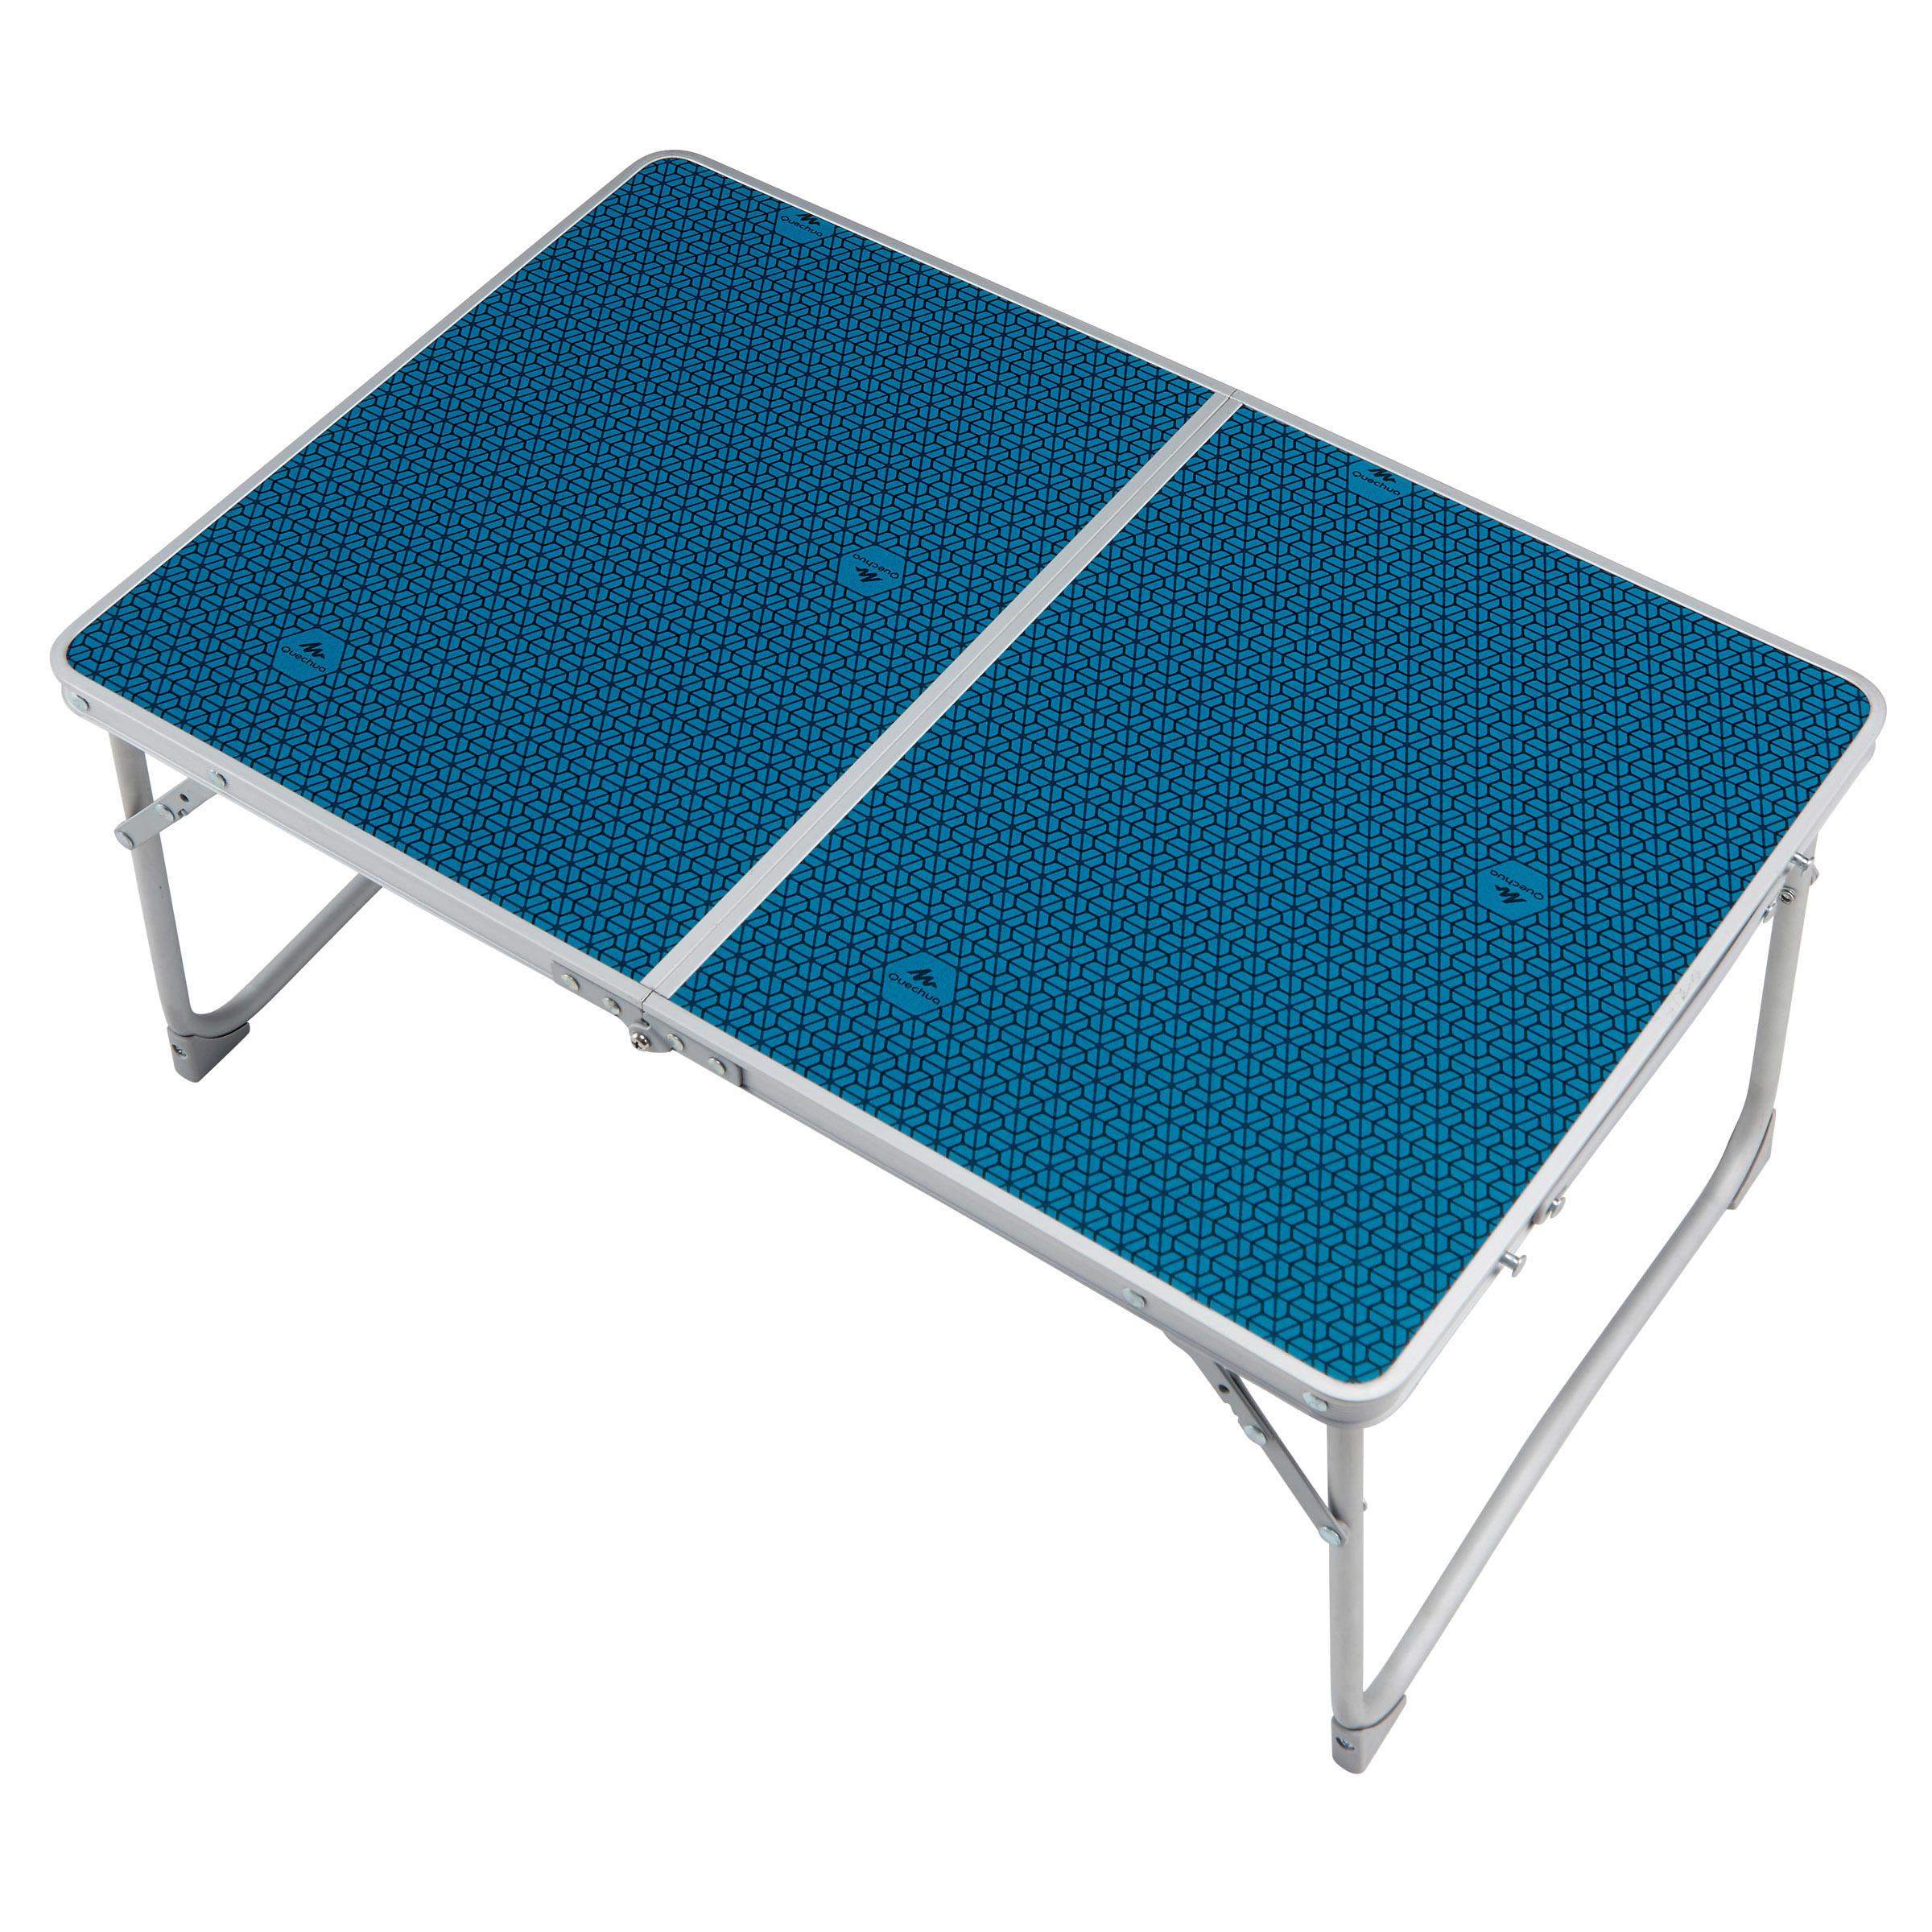 decathlon portable table